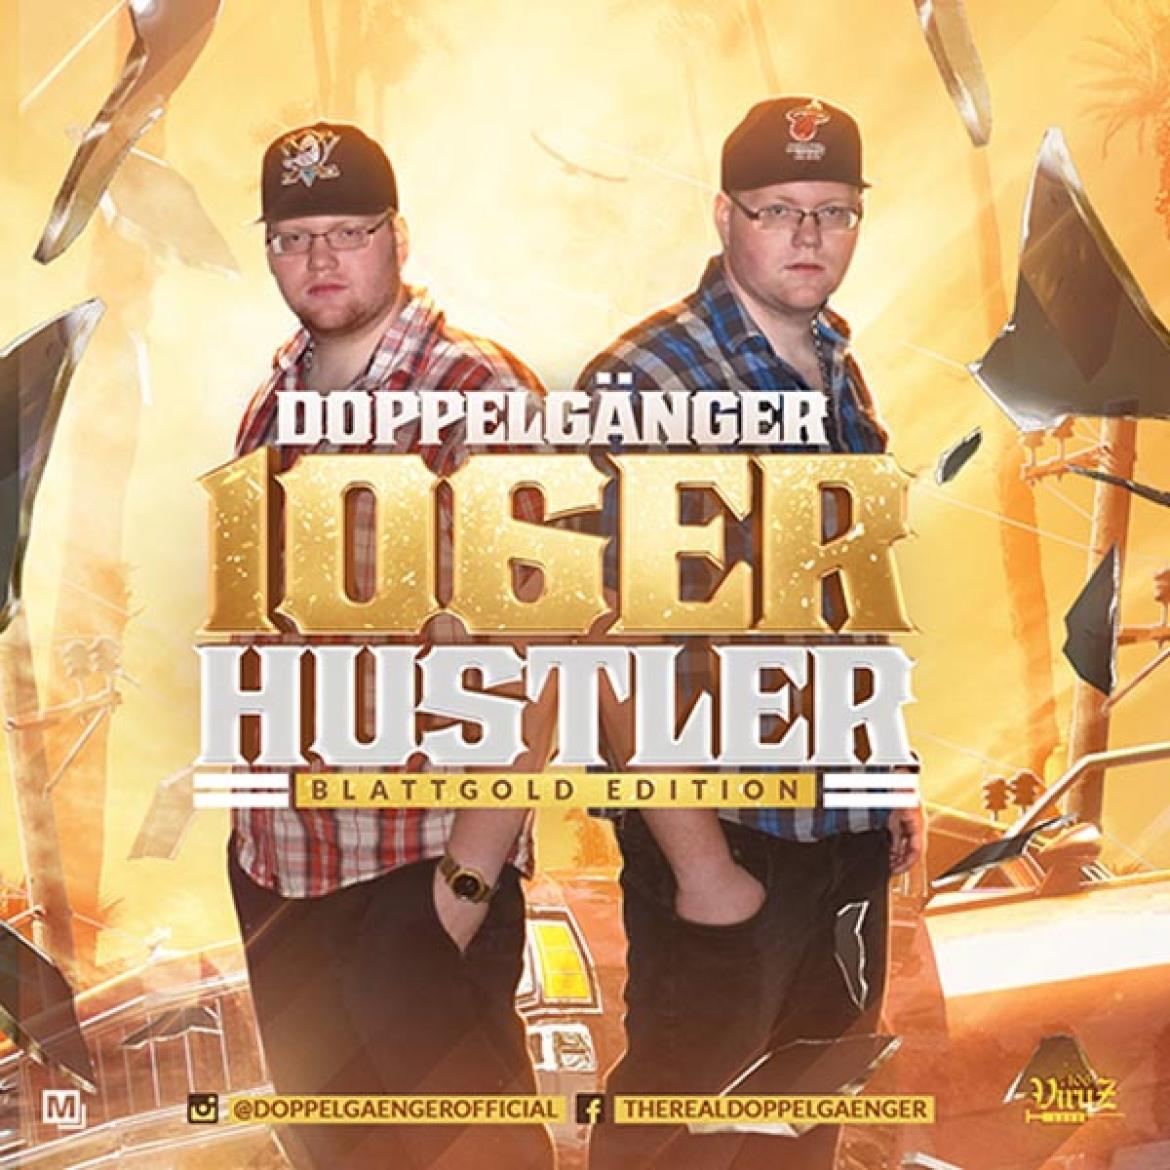 Doppelgänger - 106er Hustler [Mixtape]